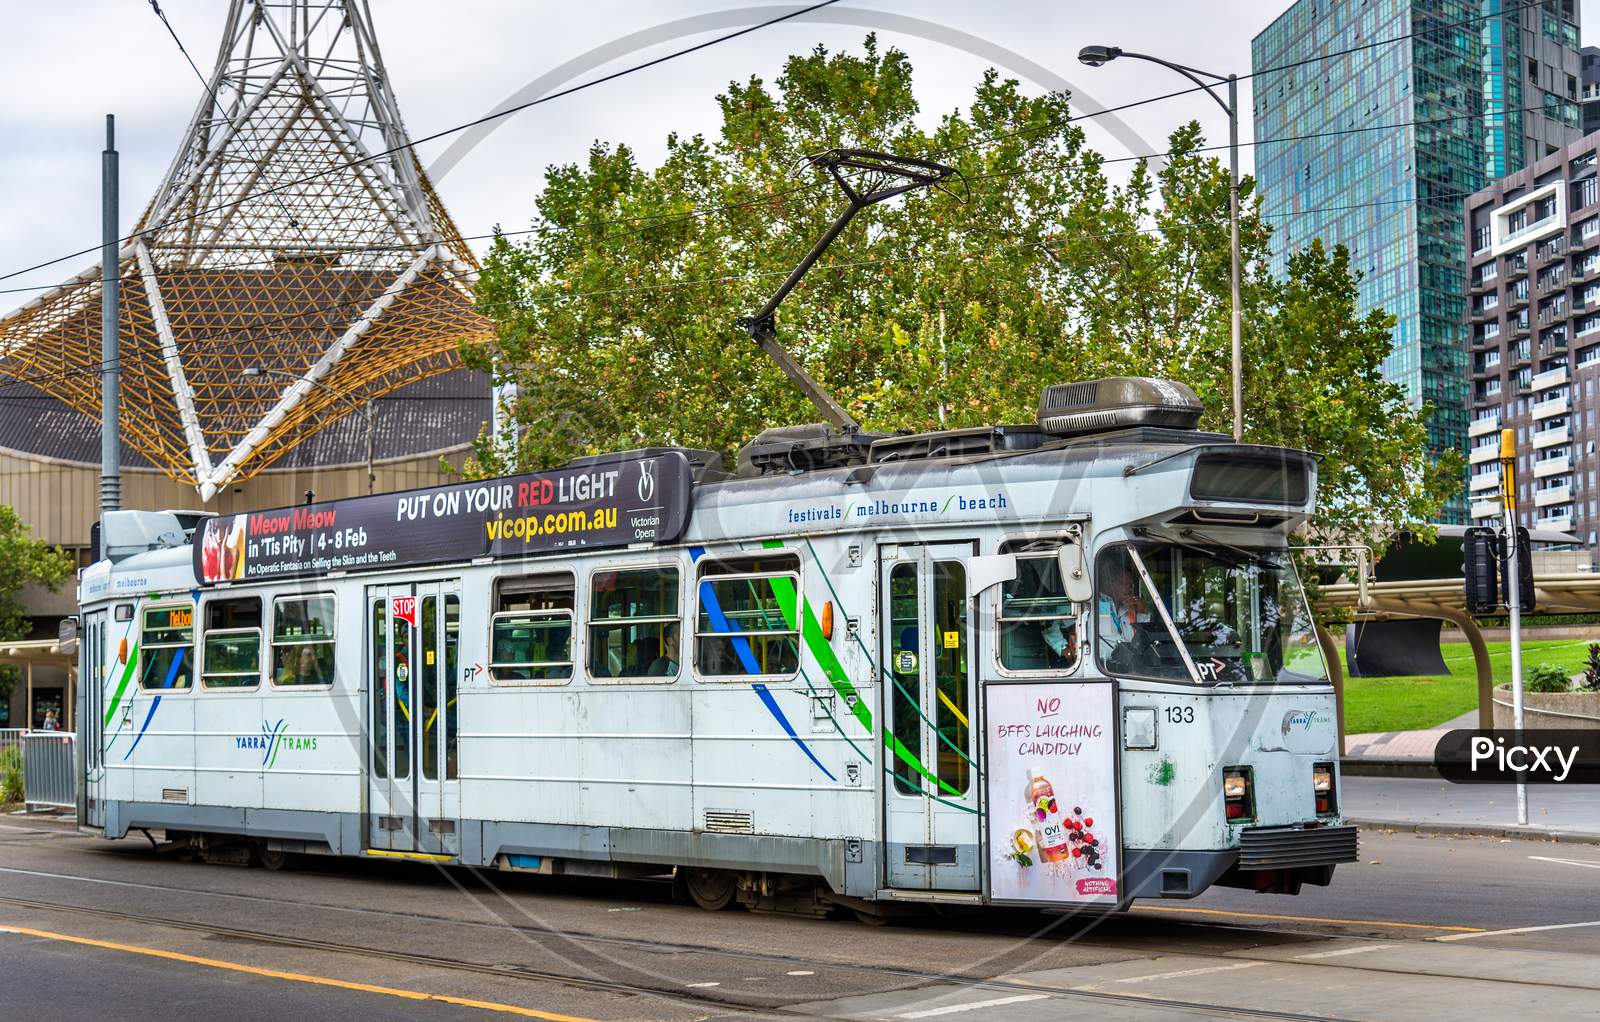 Comeng Z3 Class Tram On St Kilda Road In Melbourne, Australia